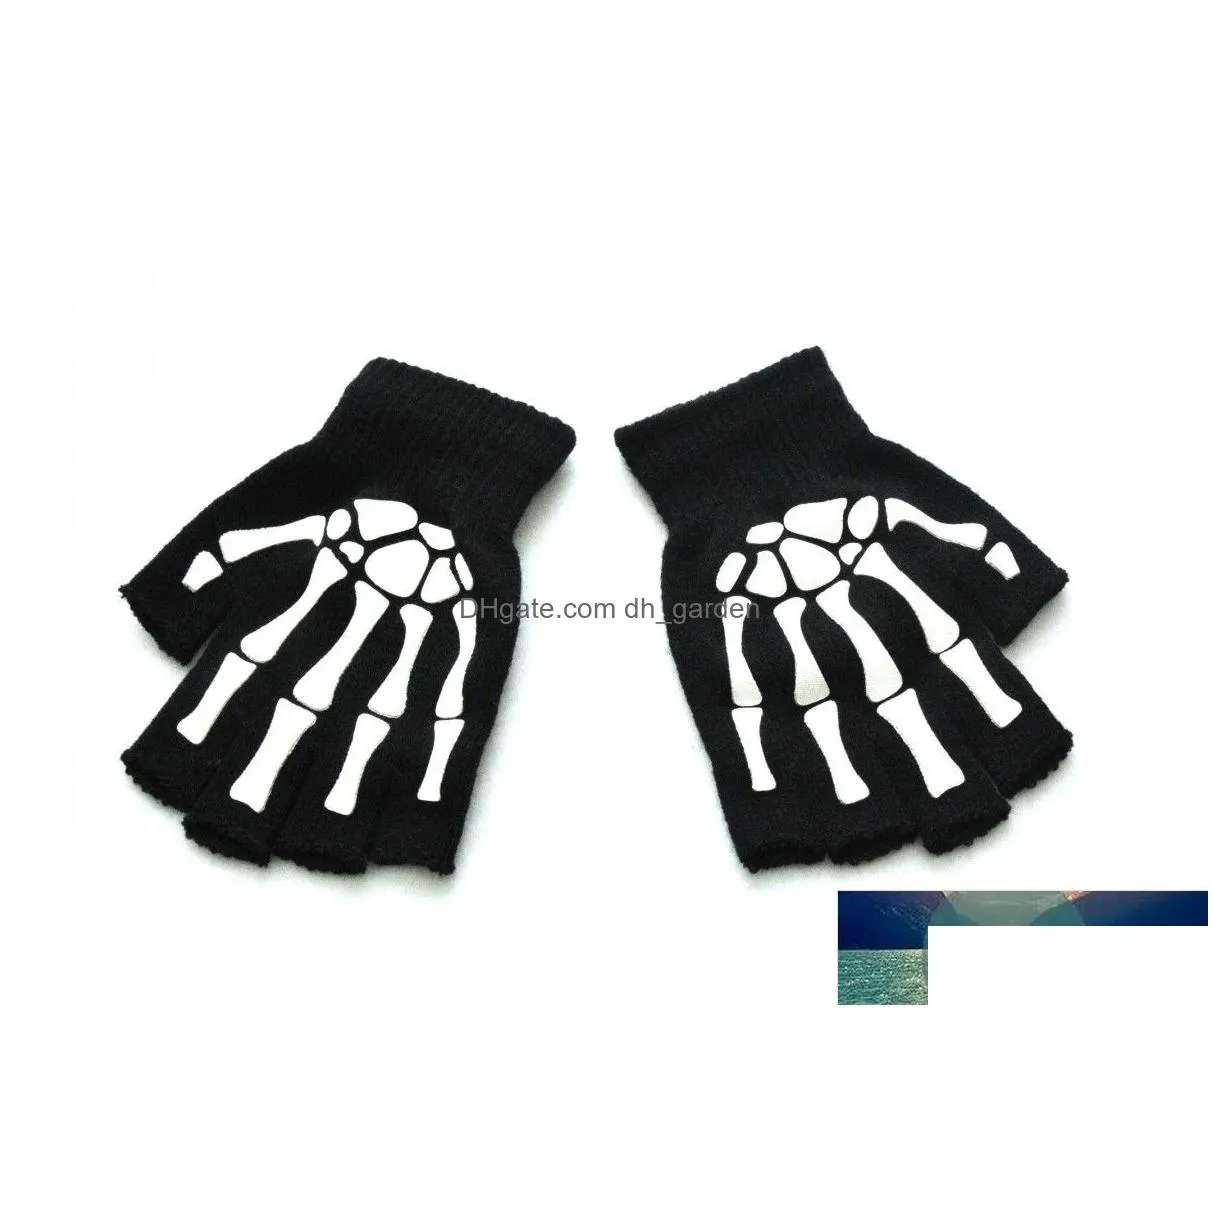 uni adult halloween skeleton skull half finger gloves glow in the dark fingerless stretch knitted winter mittens factory price expert design quality